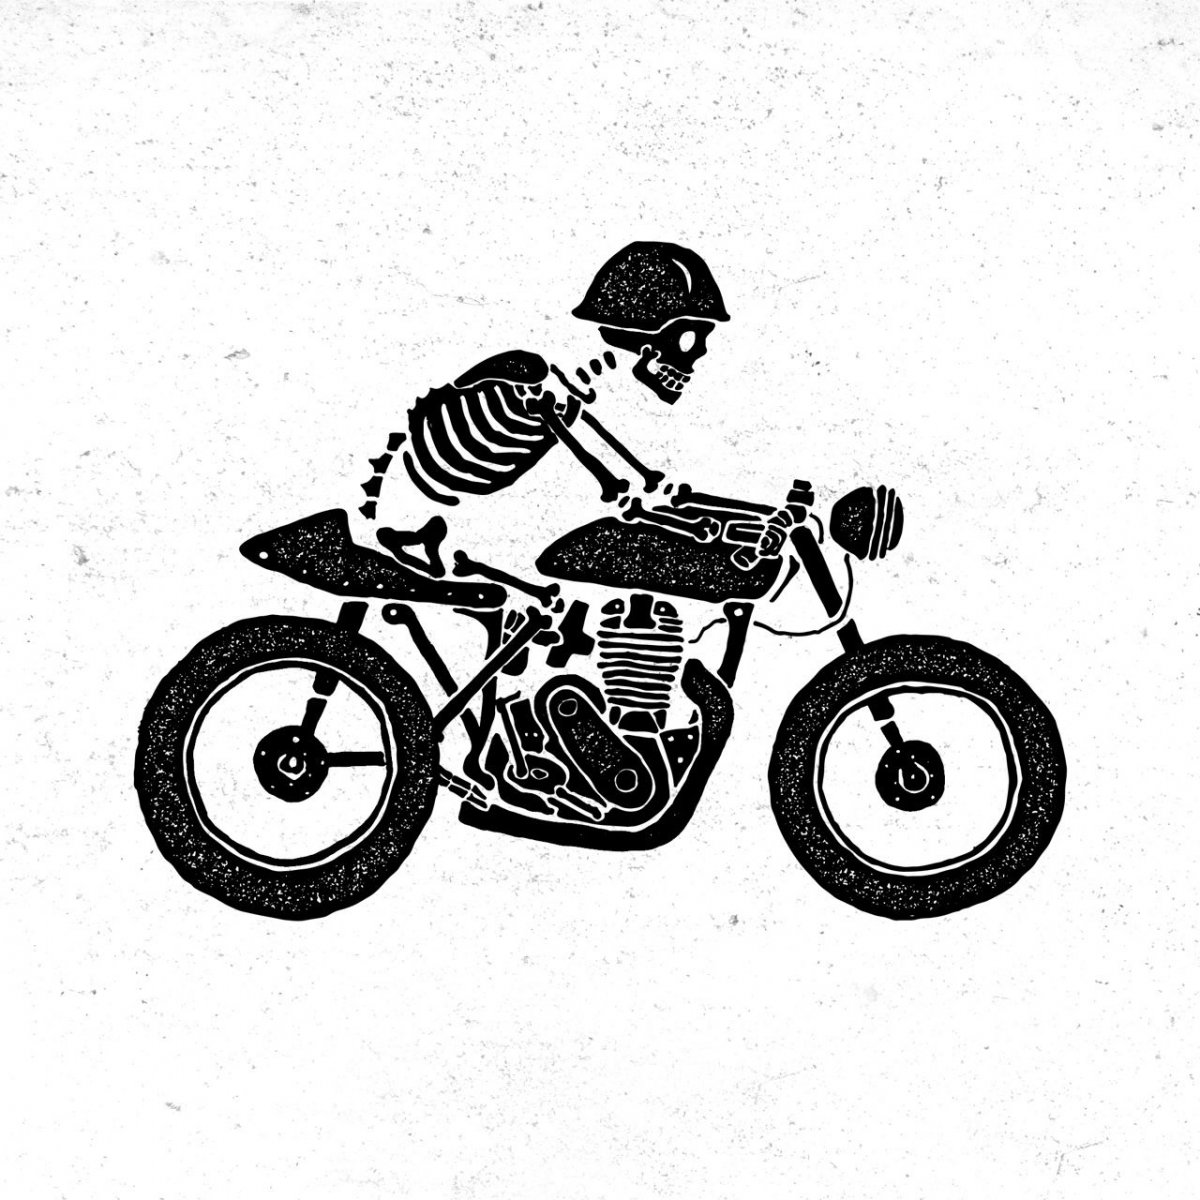 Мотоциклы Харлей Дэвидсон девушка и мотоцикл